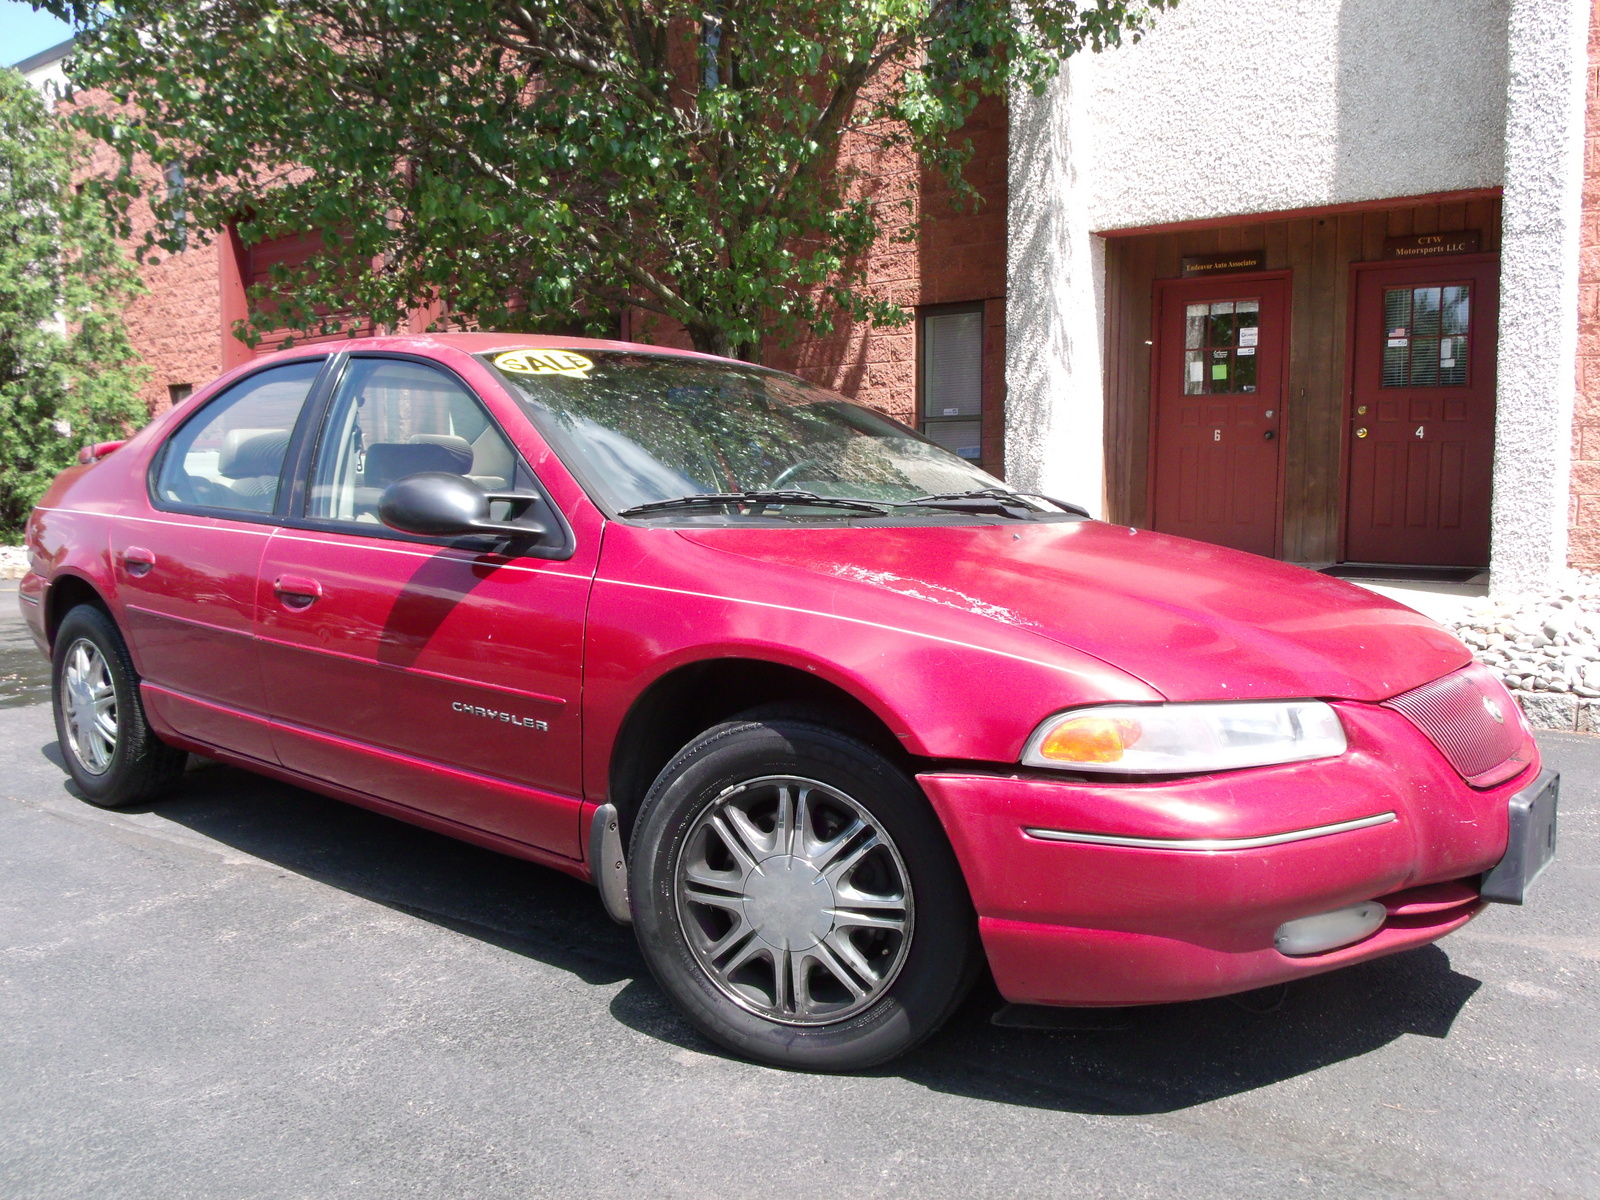 1997 Chrysler cirrus lxi review #3